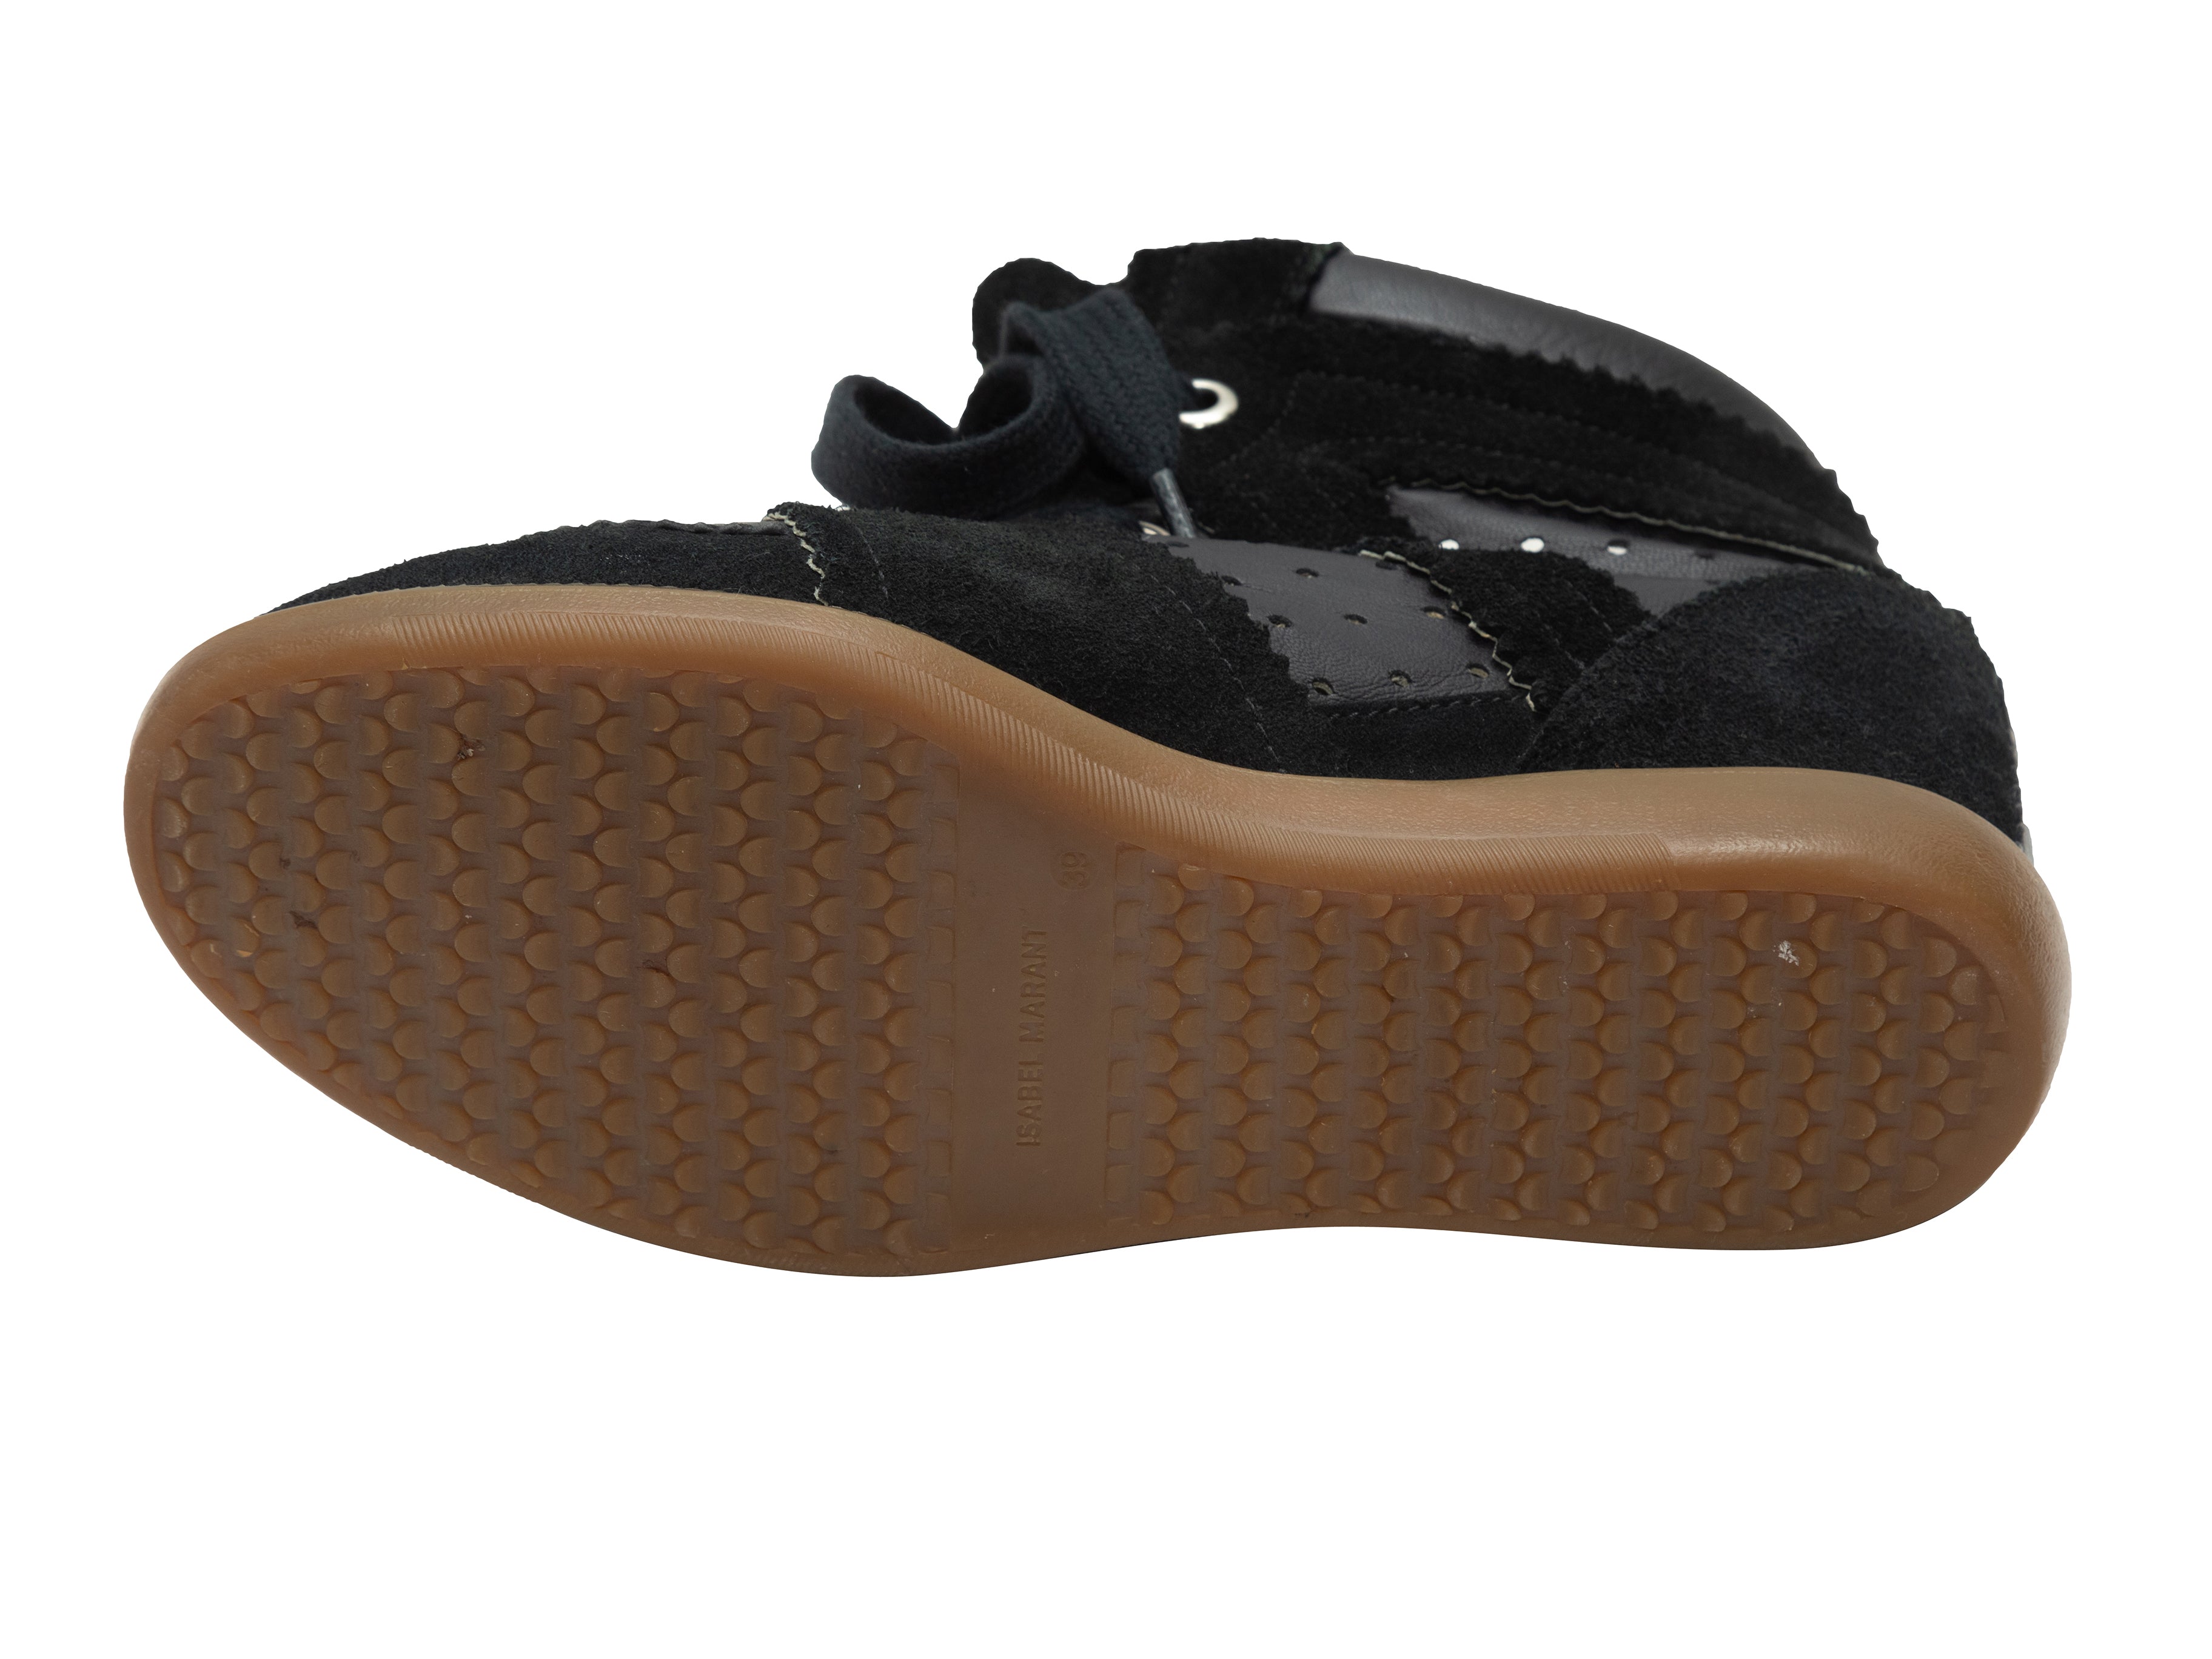 Black Suede & Leather Wedge Sneakers